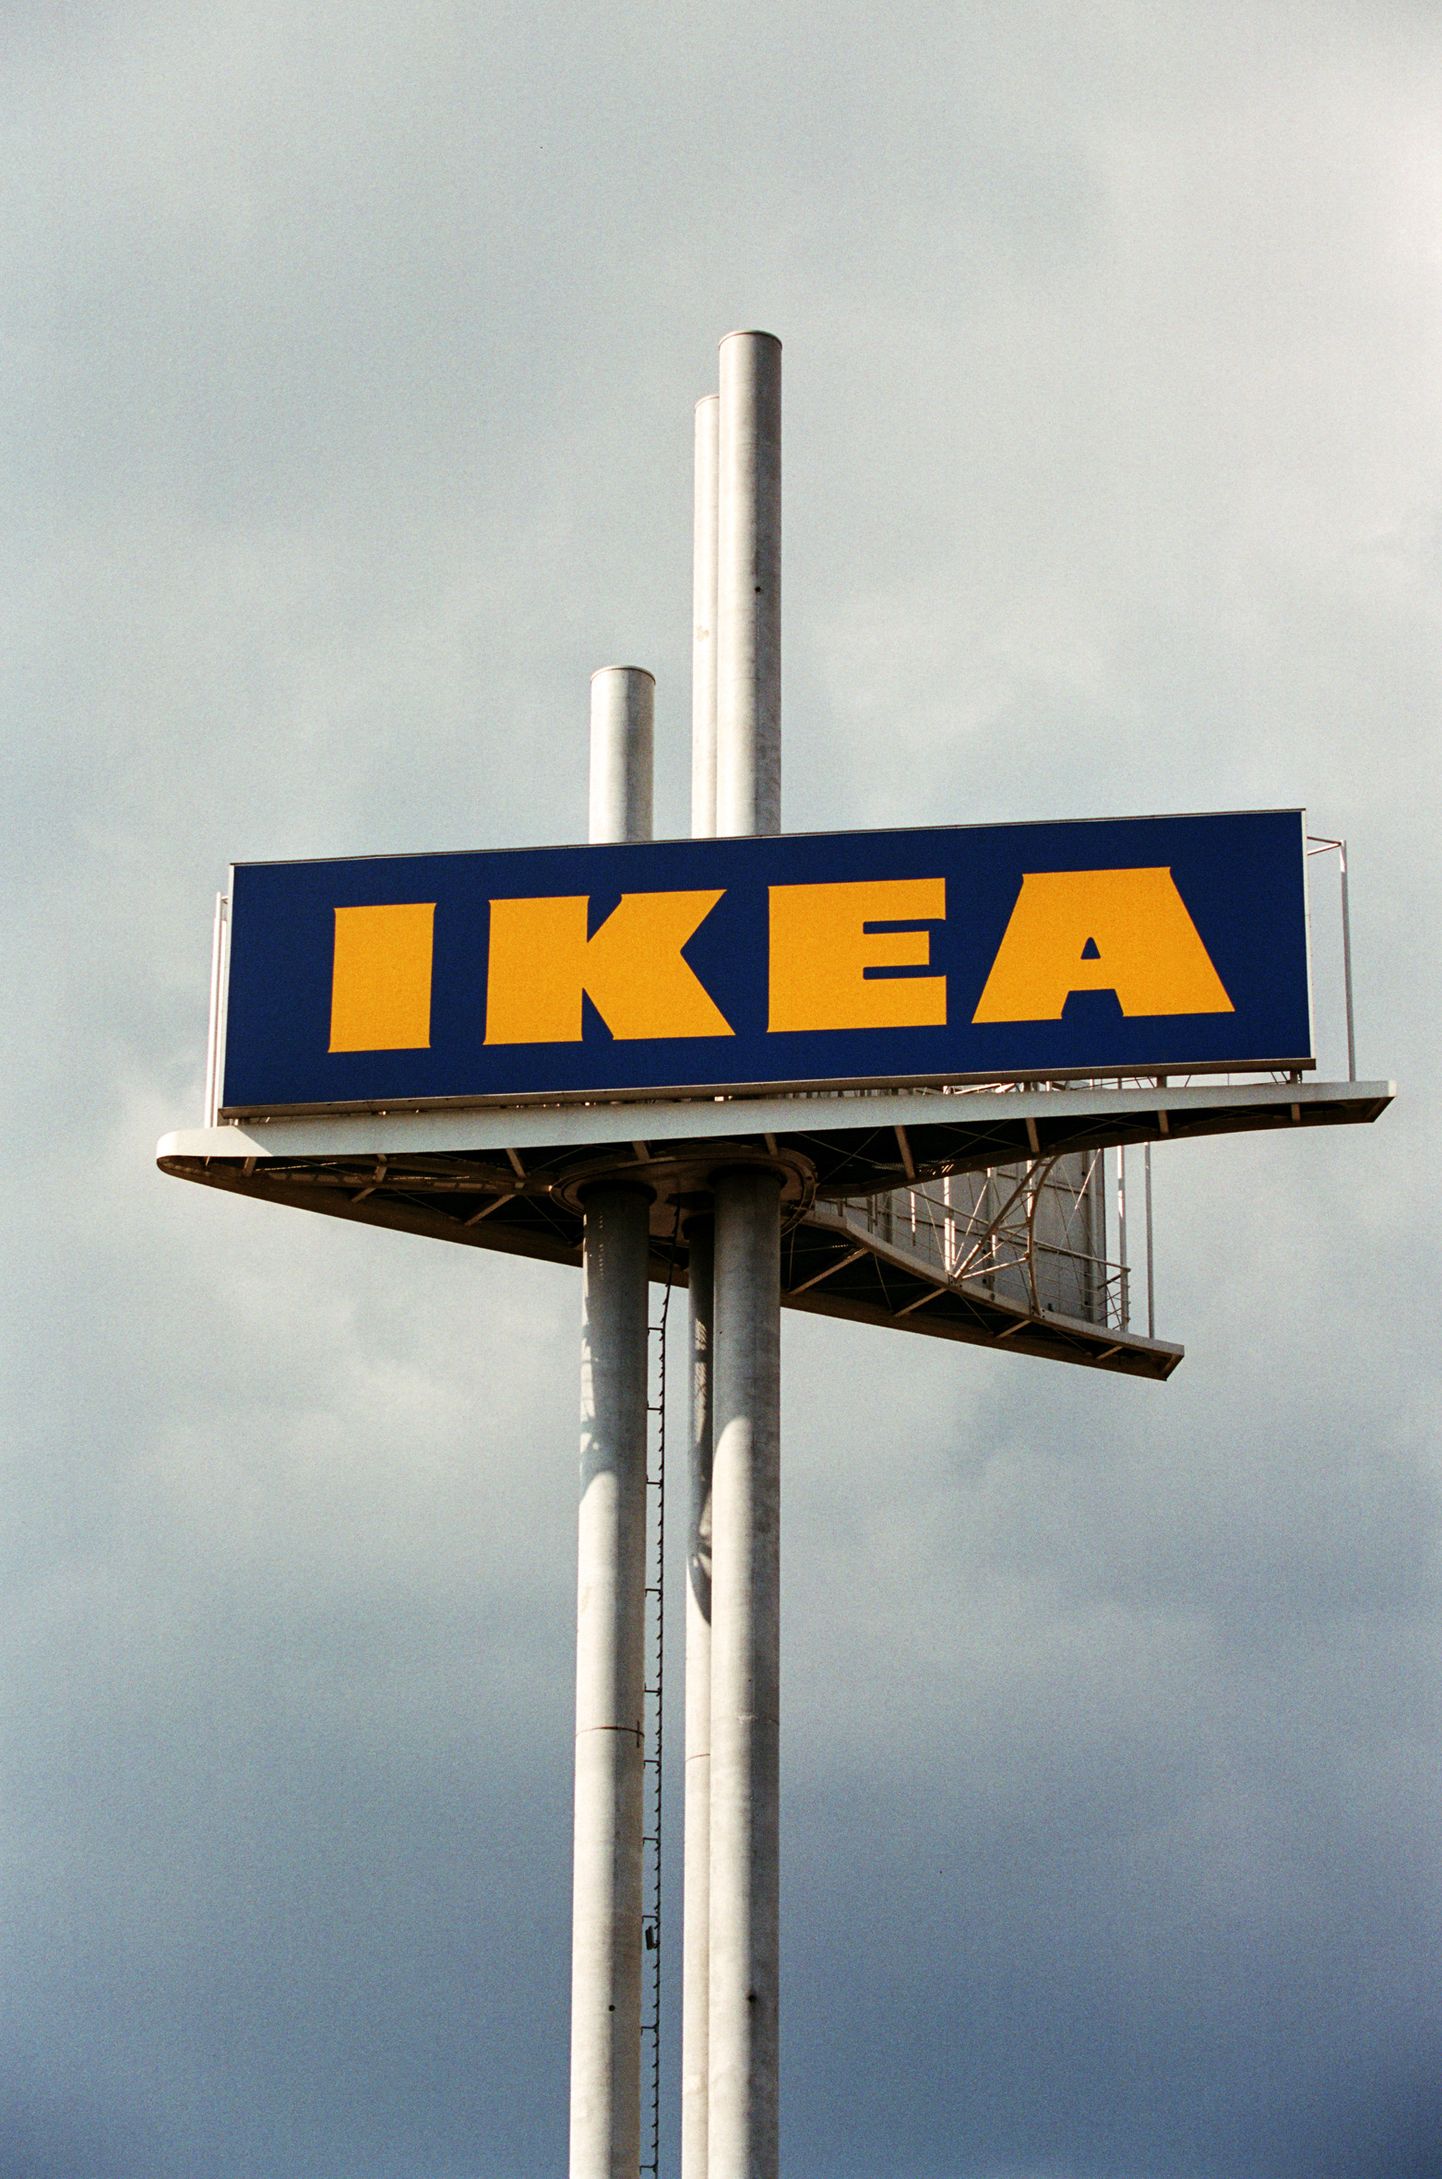 IKEA logo.